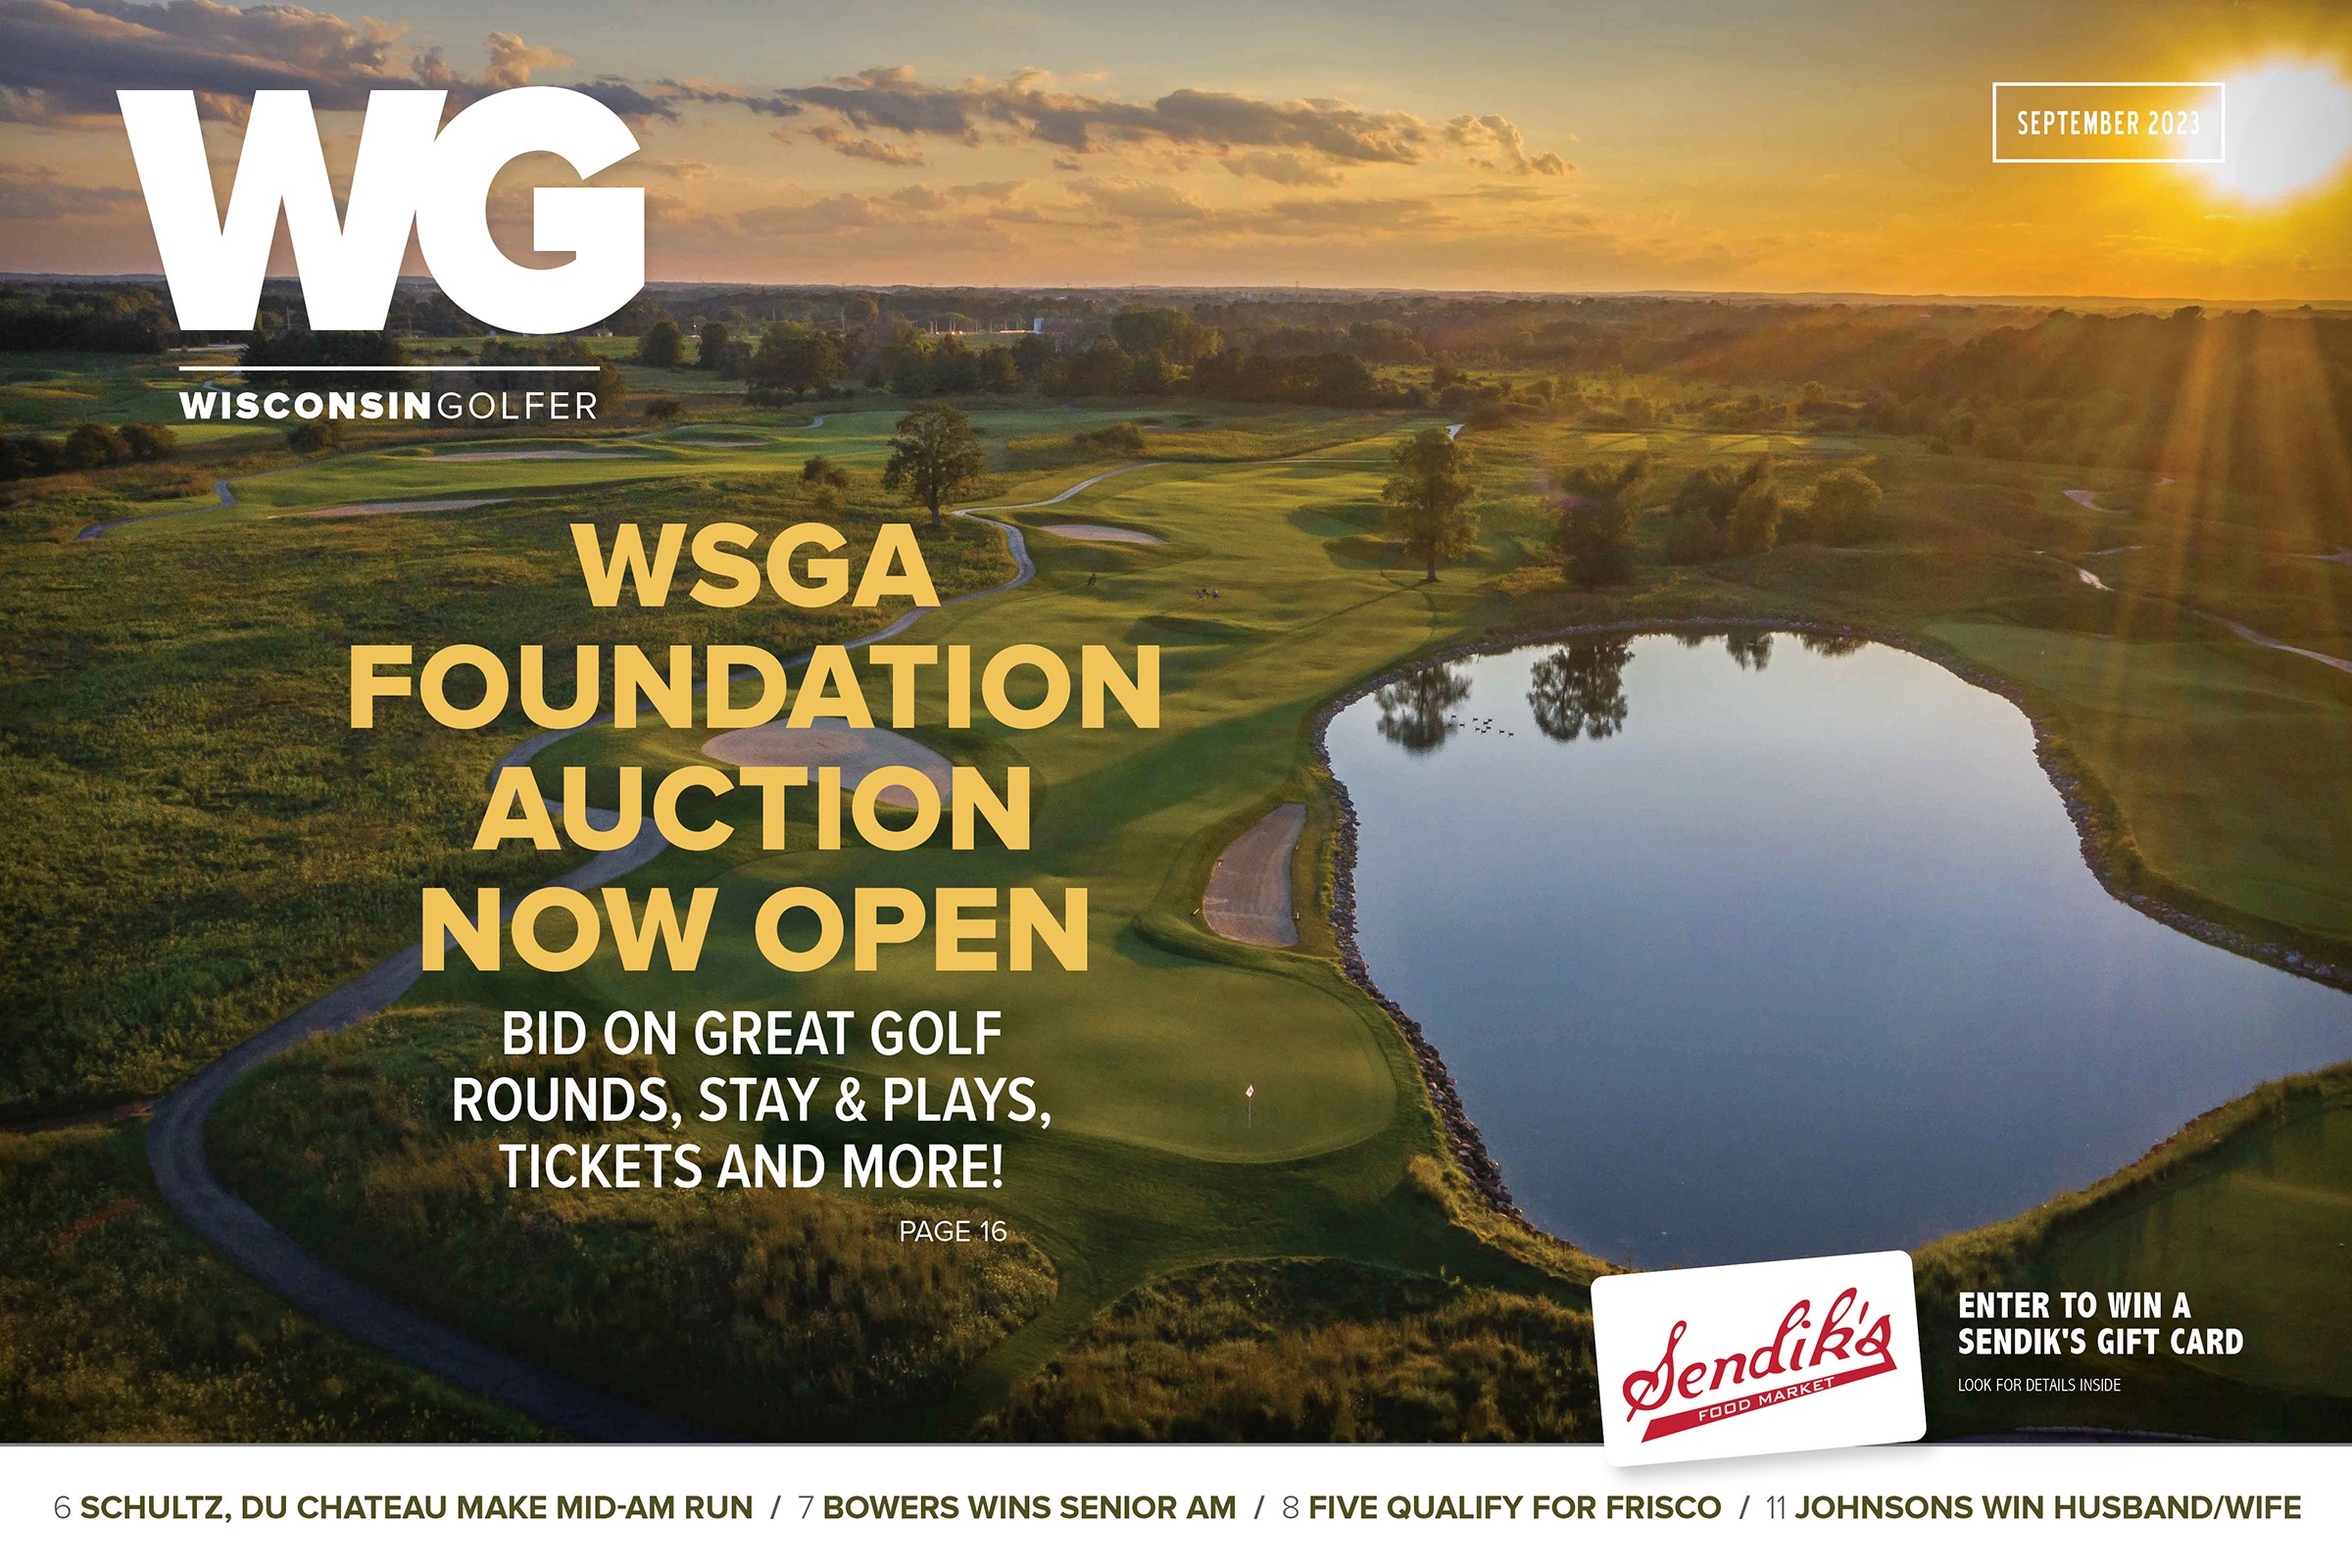 Wisconsin Golfer Magazine Wisconsin State Golf Association pic